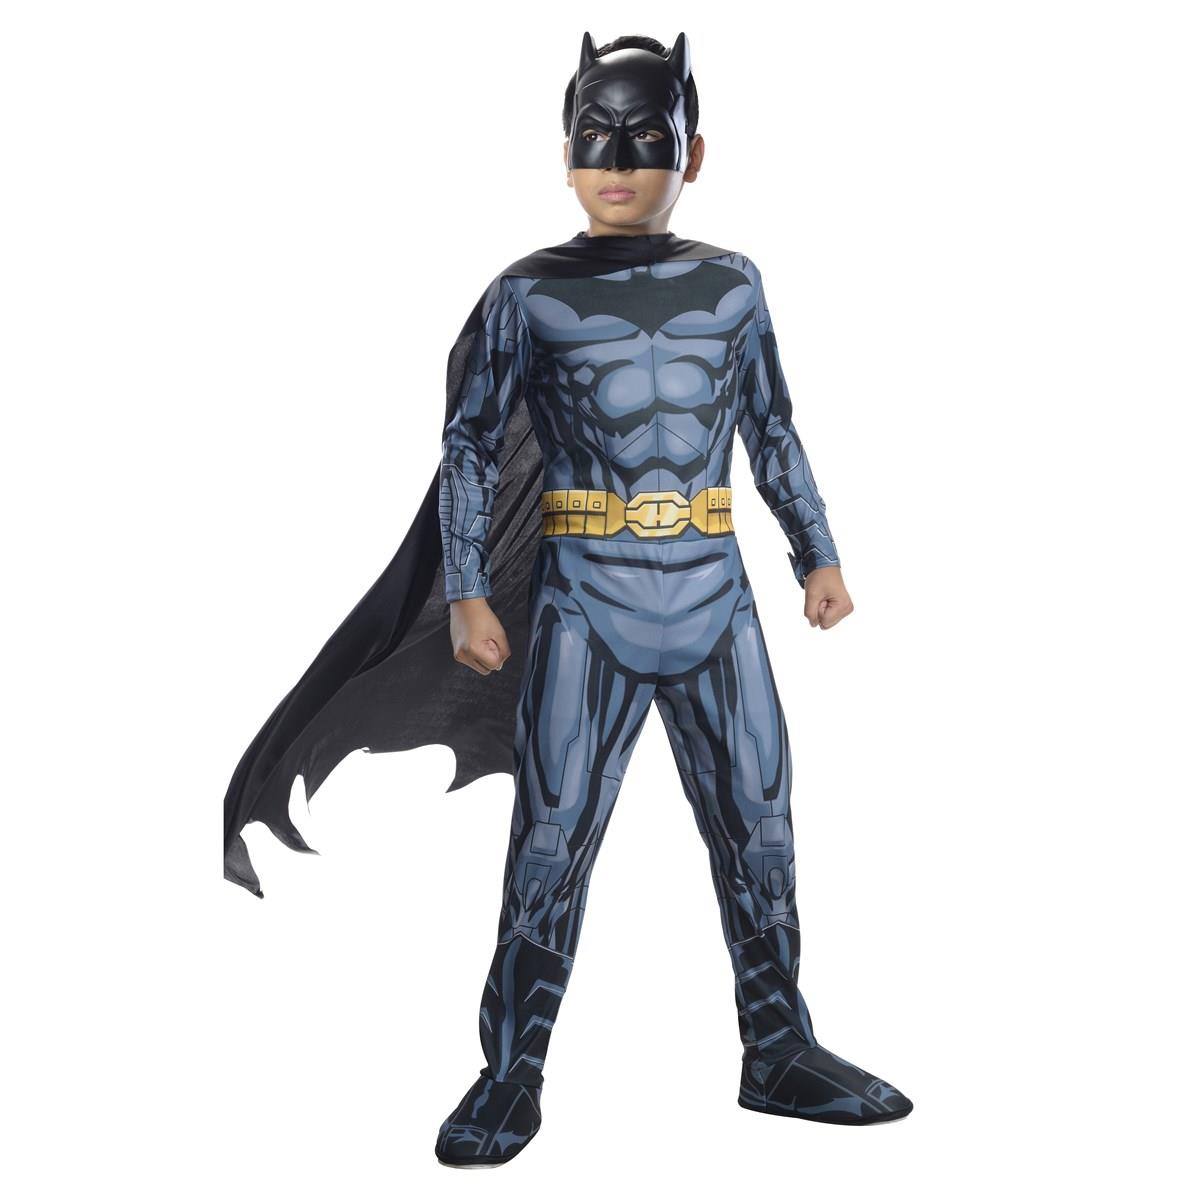 274360 Photo Real Batman Child Costume, Medium